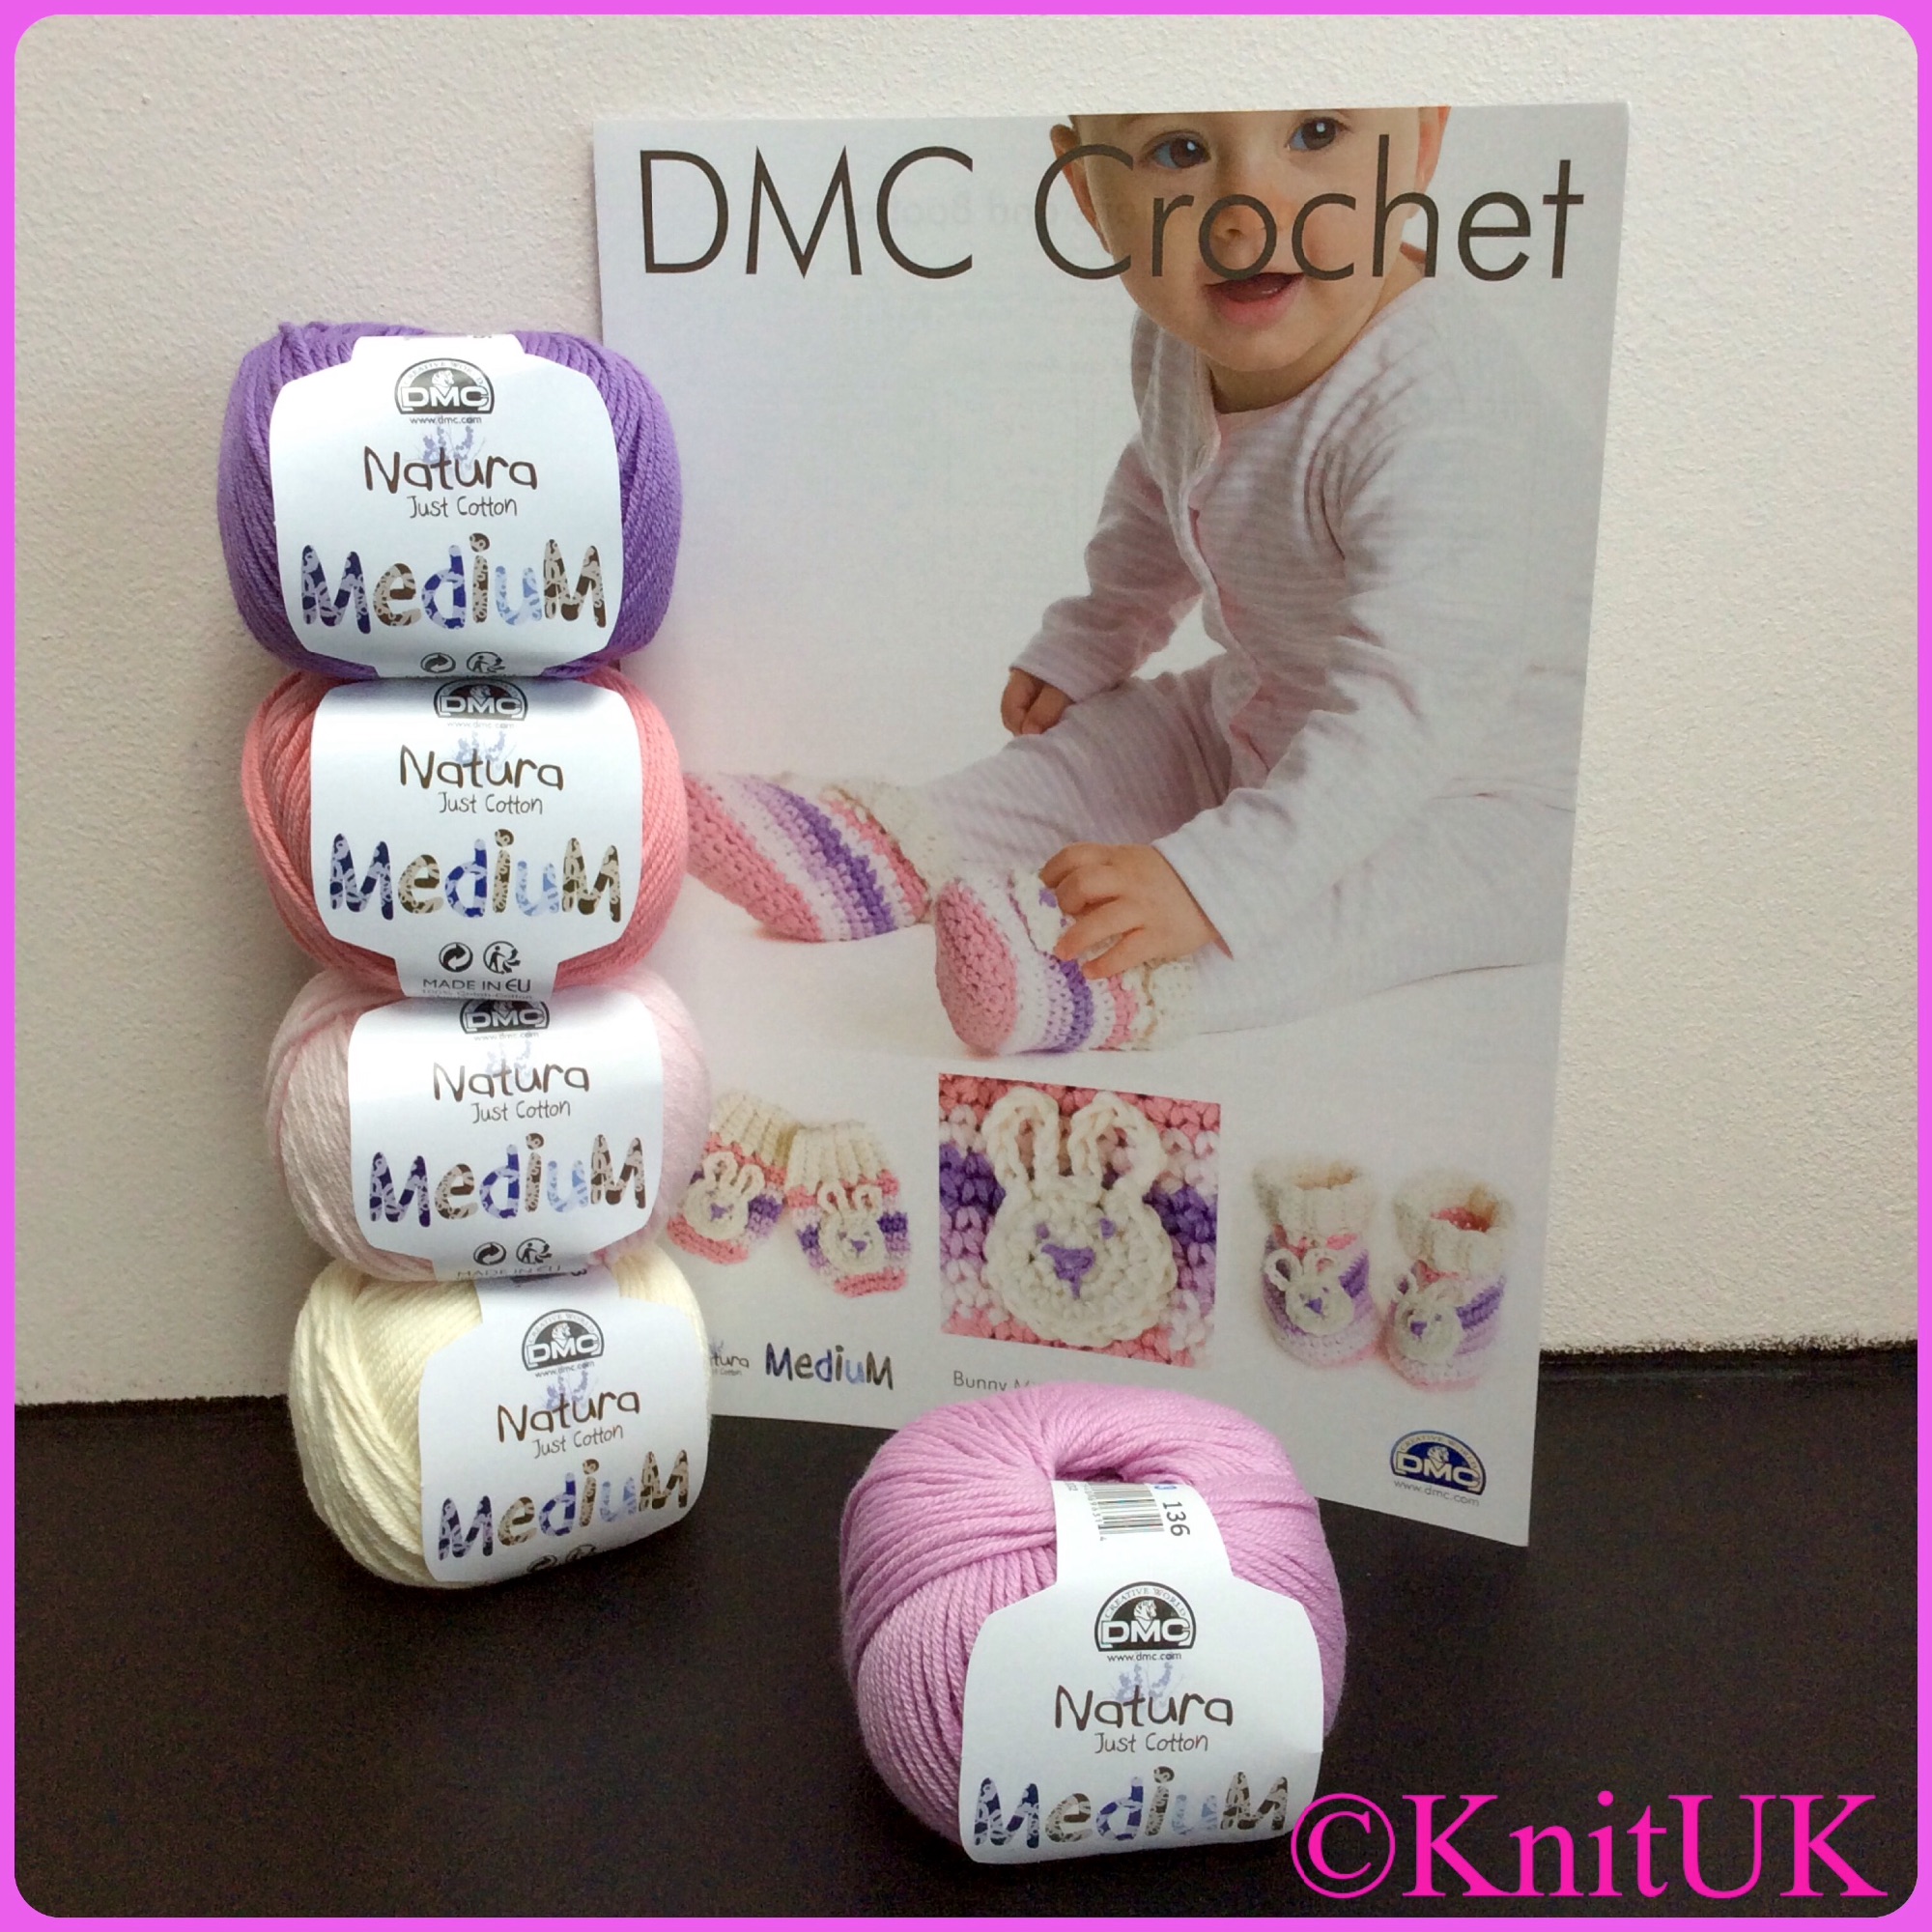 DMC crochet bunny mittens and bootees pattern and natura medium yarn